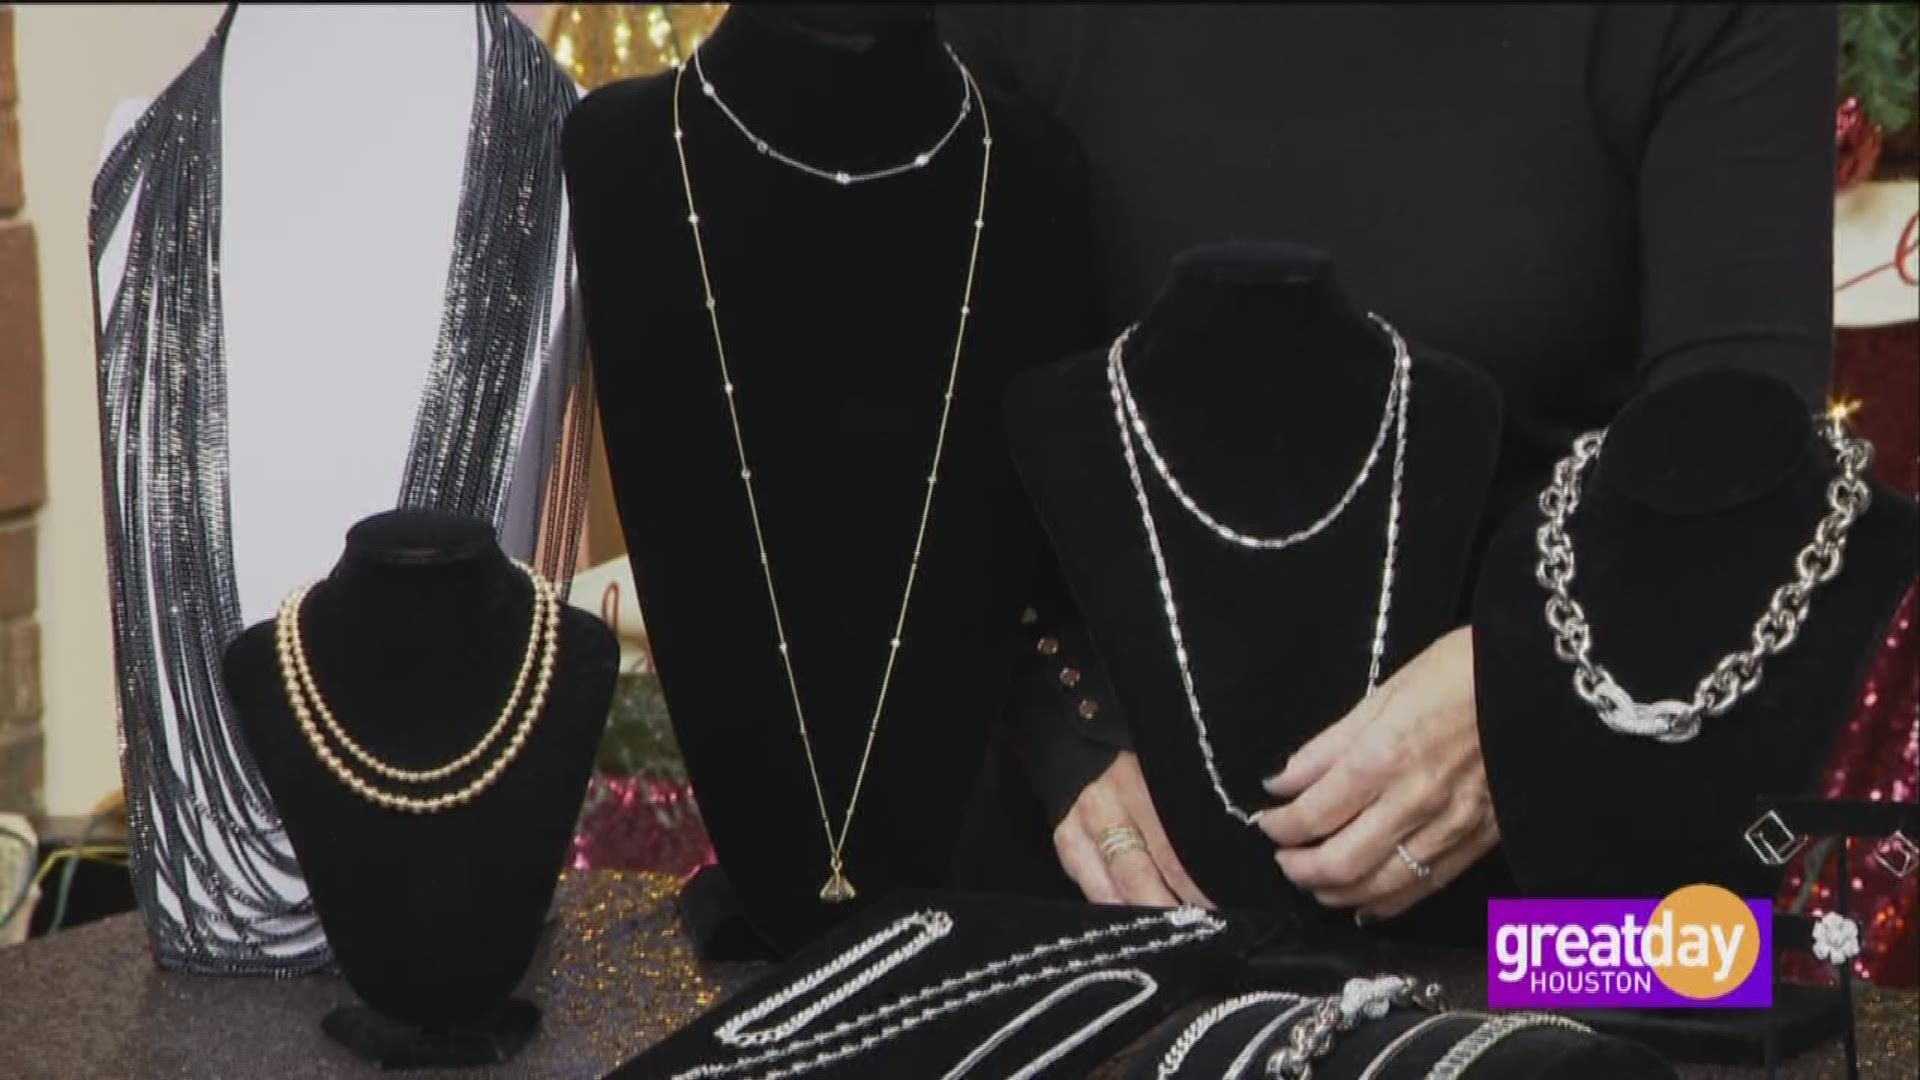 Celebrity jewelry designer Lisa Freede showed us her designs that offer bling on a budget.